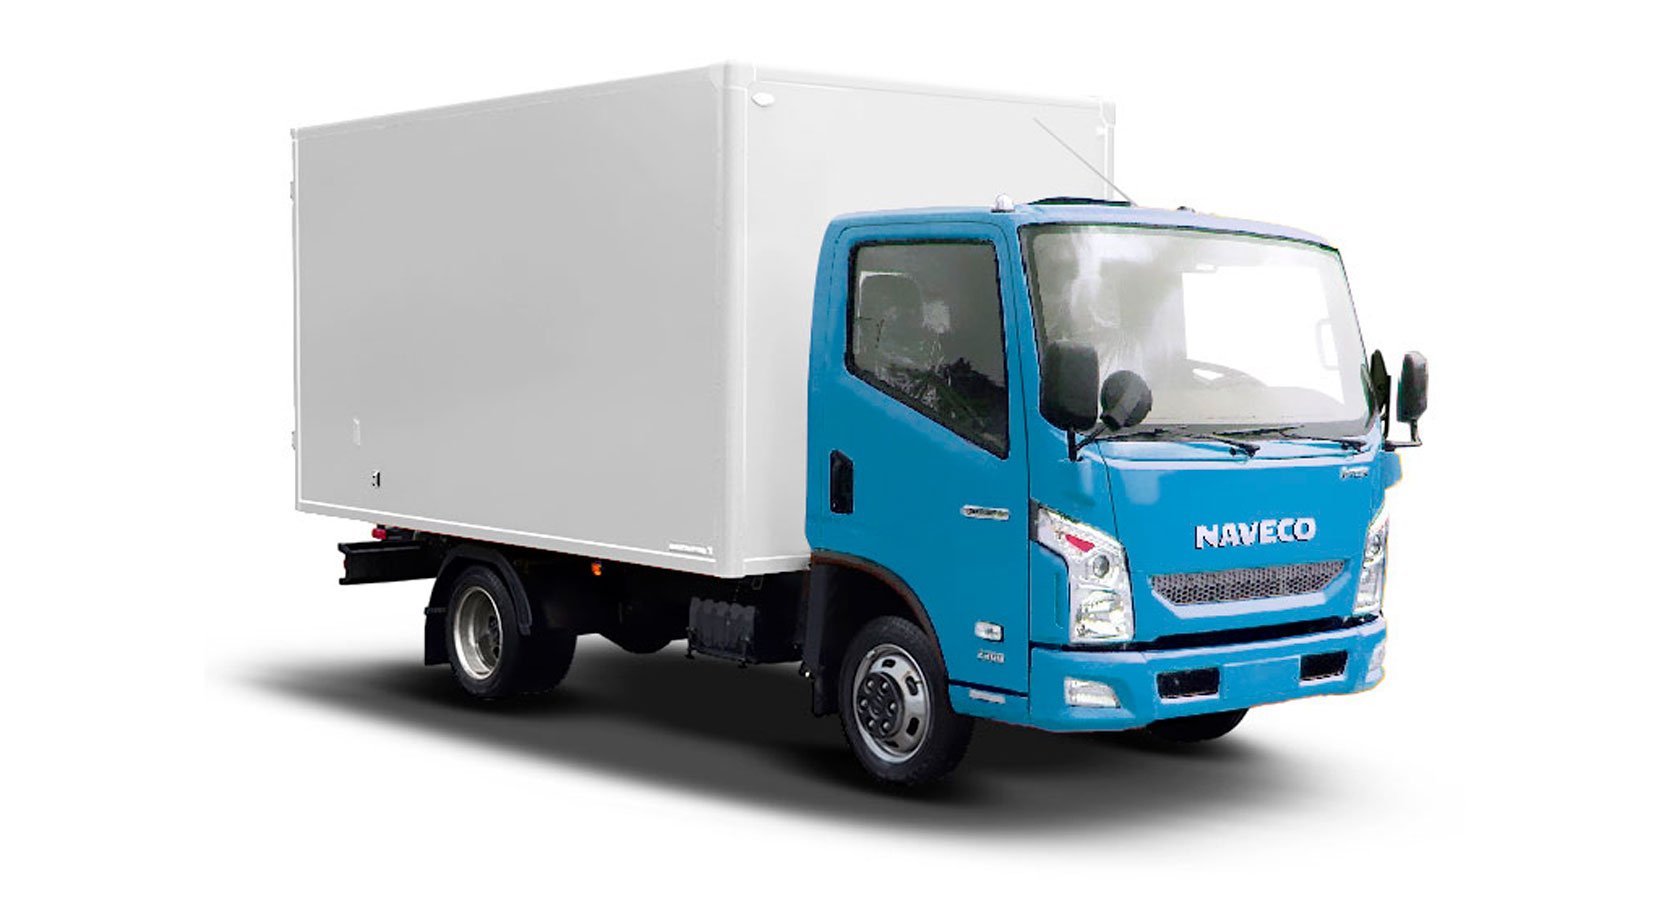 Купить грузовик до 2 тонн. Грузовик Naveco c300. Hyundai 72, фургон 3,5т. Фотон бортовой 5 тонн. Грузовик Навеко 3 тонн.